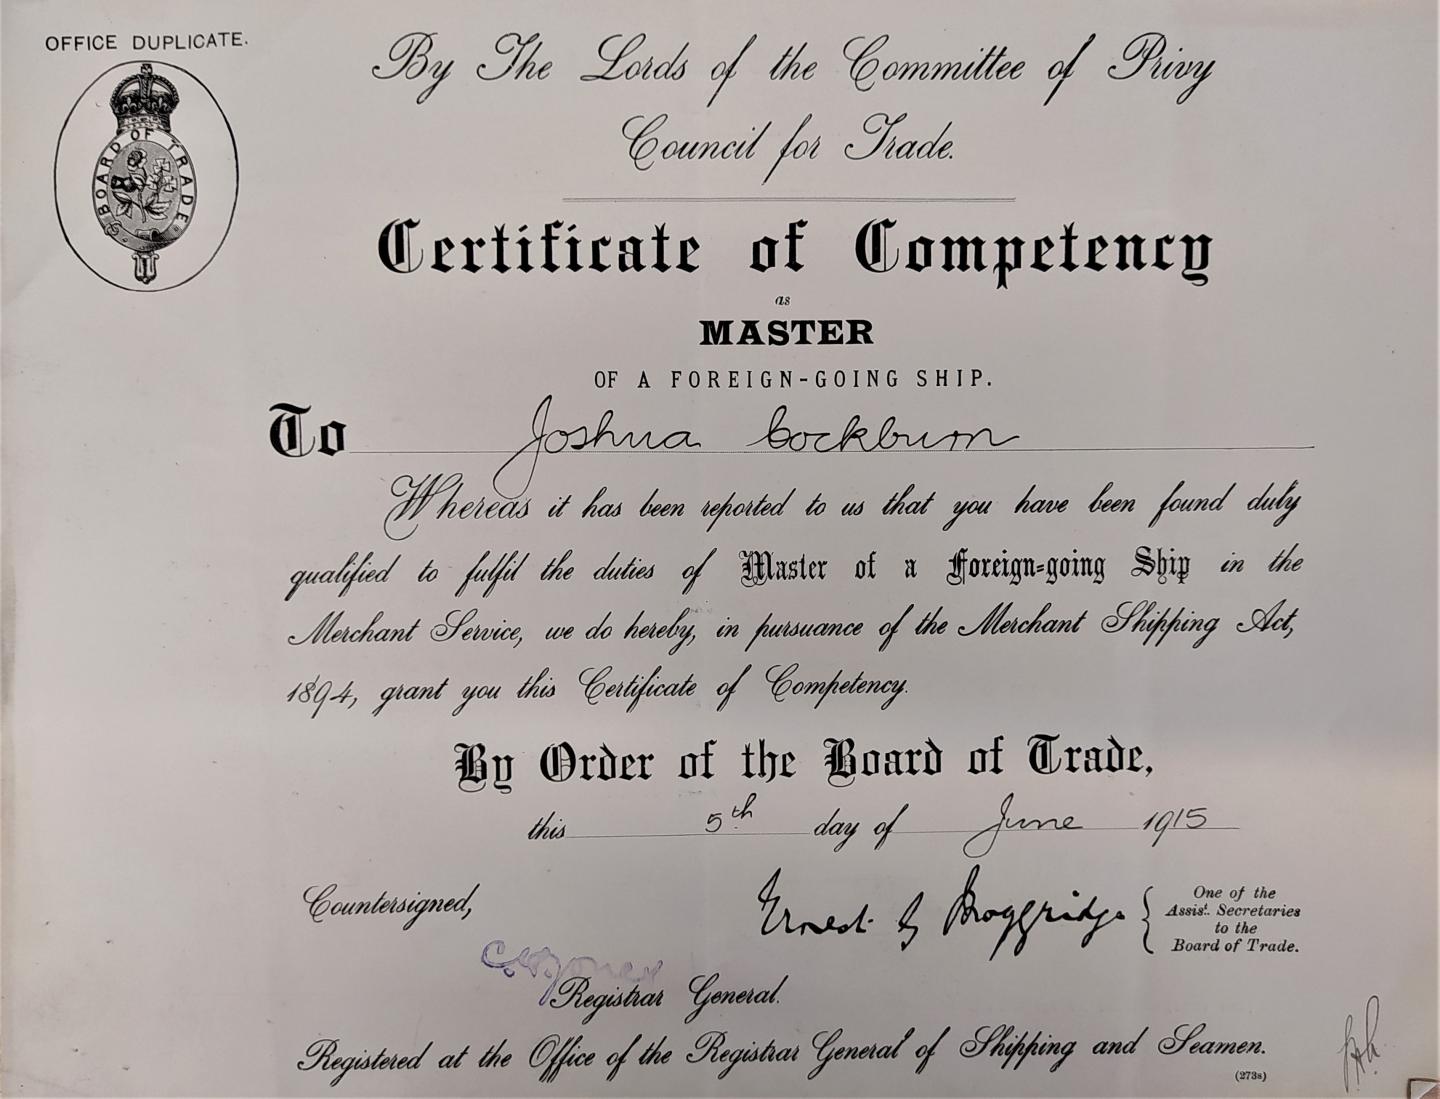 Joshua Cockburn master's certificate